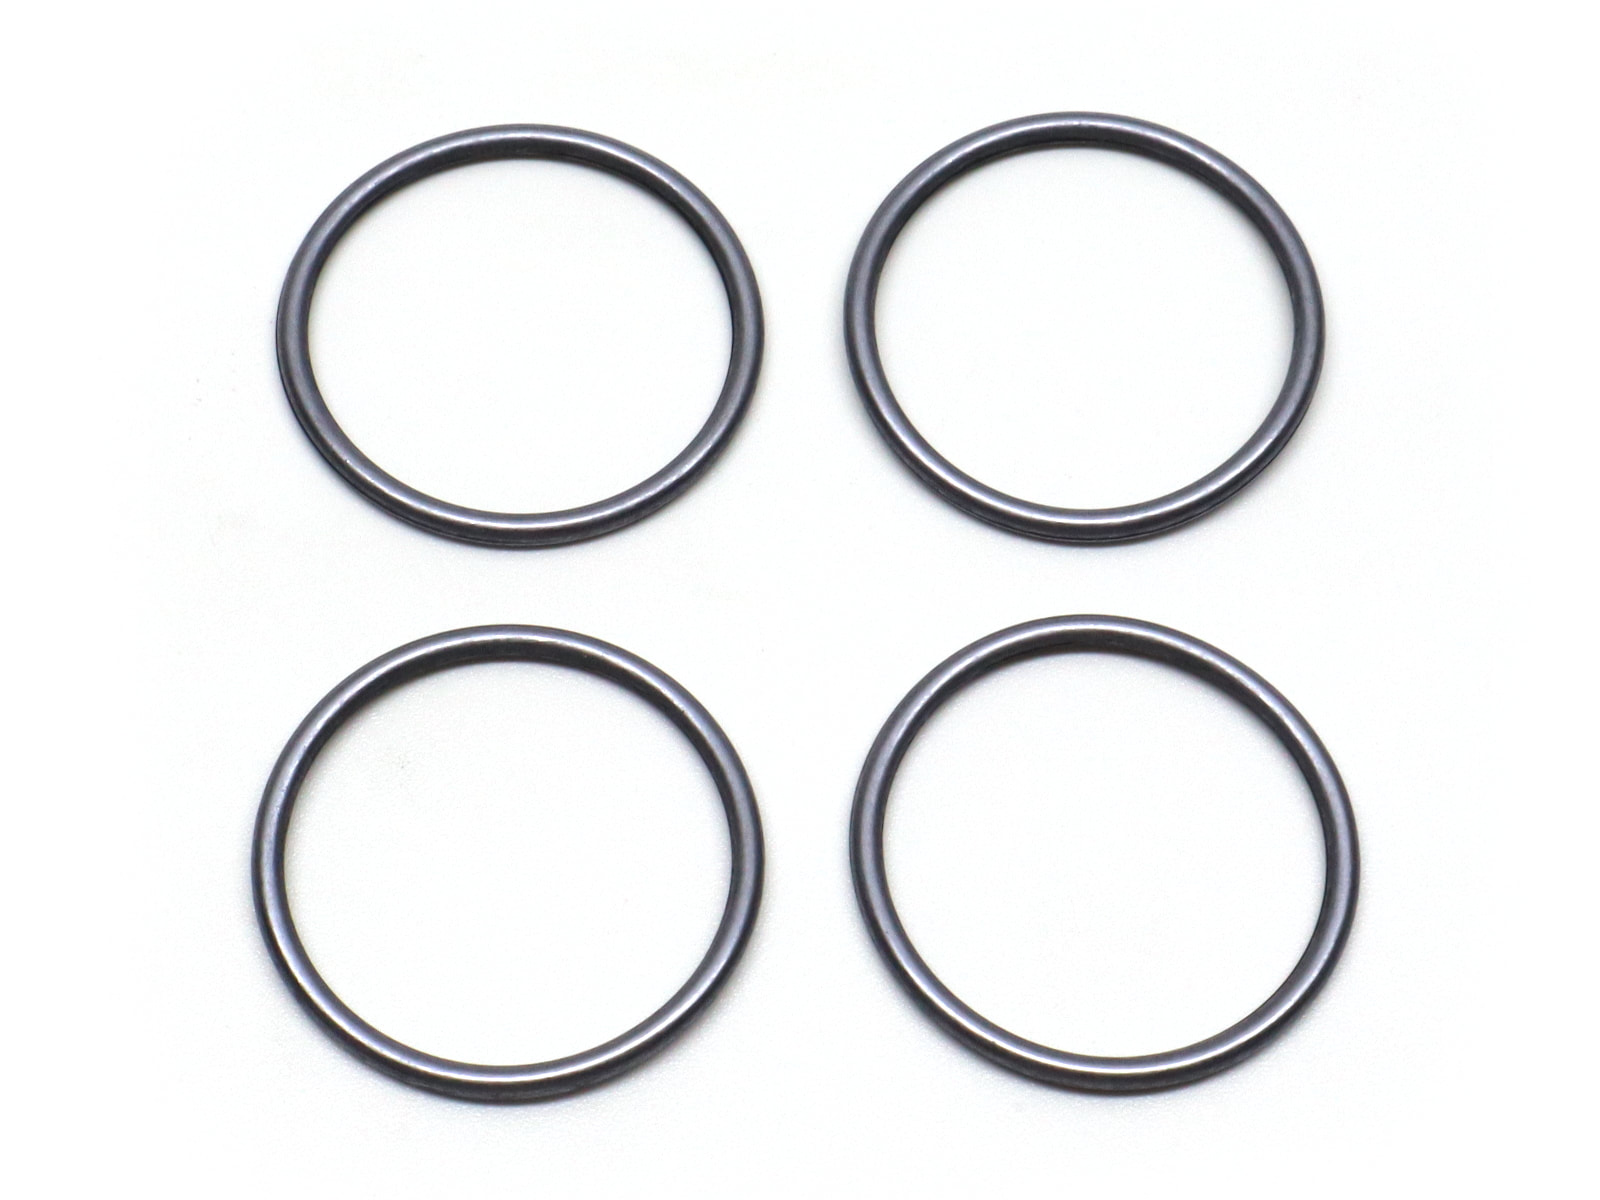 18 Pcs O-Ring Kit, 3-22 mm Nitrile Rubber Metric O Ring for Seal Hydraulic  Plumbing & Auto sealing oil Resistant, Hydraulic Pump compressor Car,  Cycle, Tap plumbing jack Quick Repair - GENERASIS :